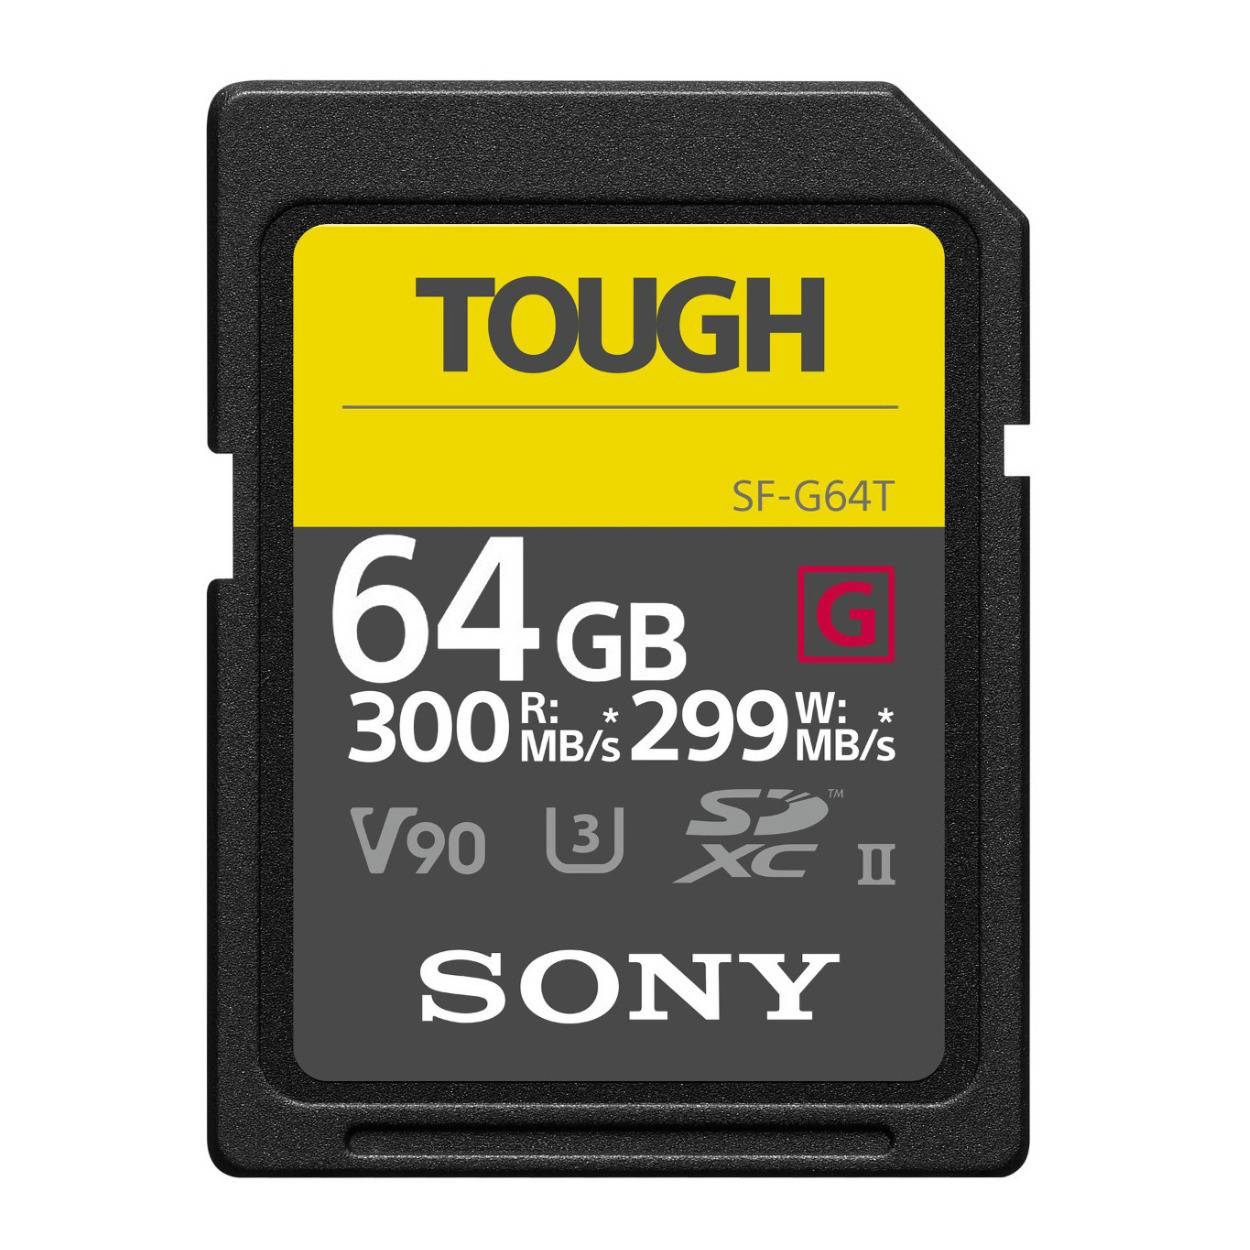 Sony 64GB UHS-II Tough G-Series SD Card